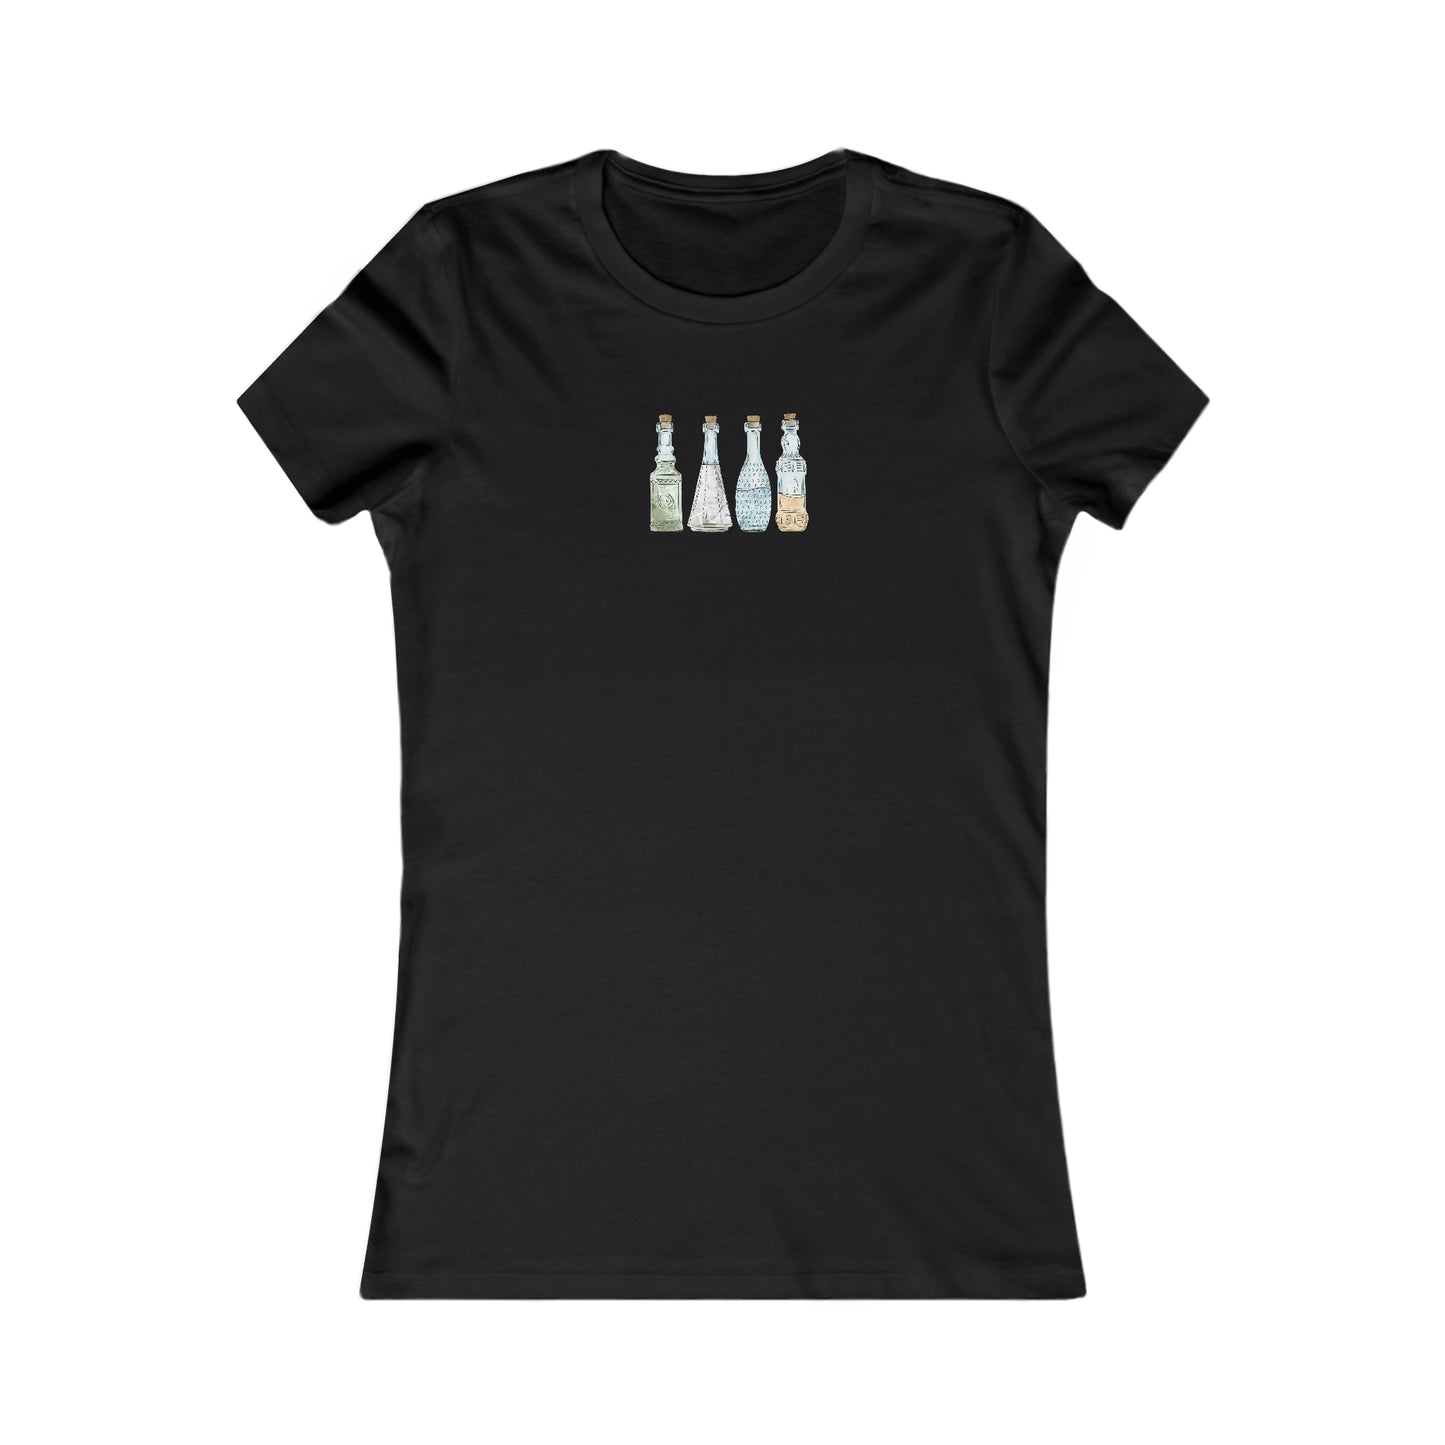 Unlabeled Pride Flag Potion Bottles - Women's T-Shirt